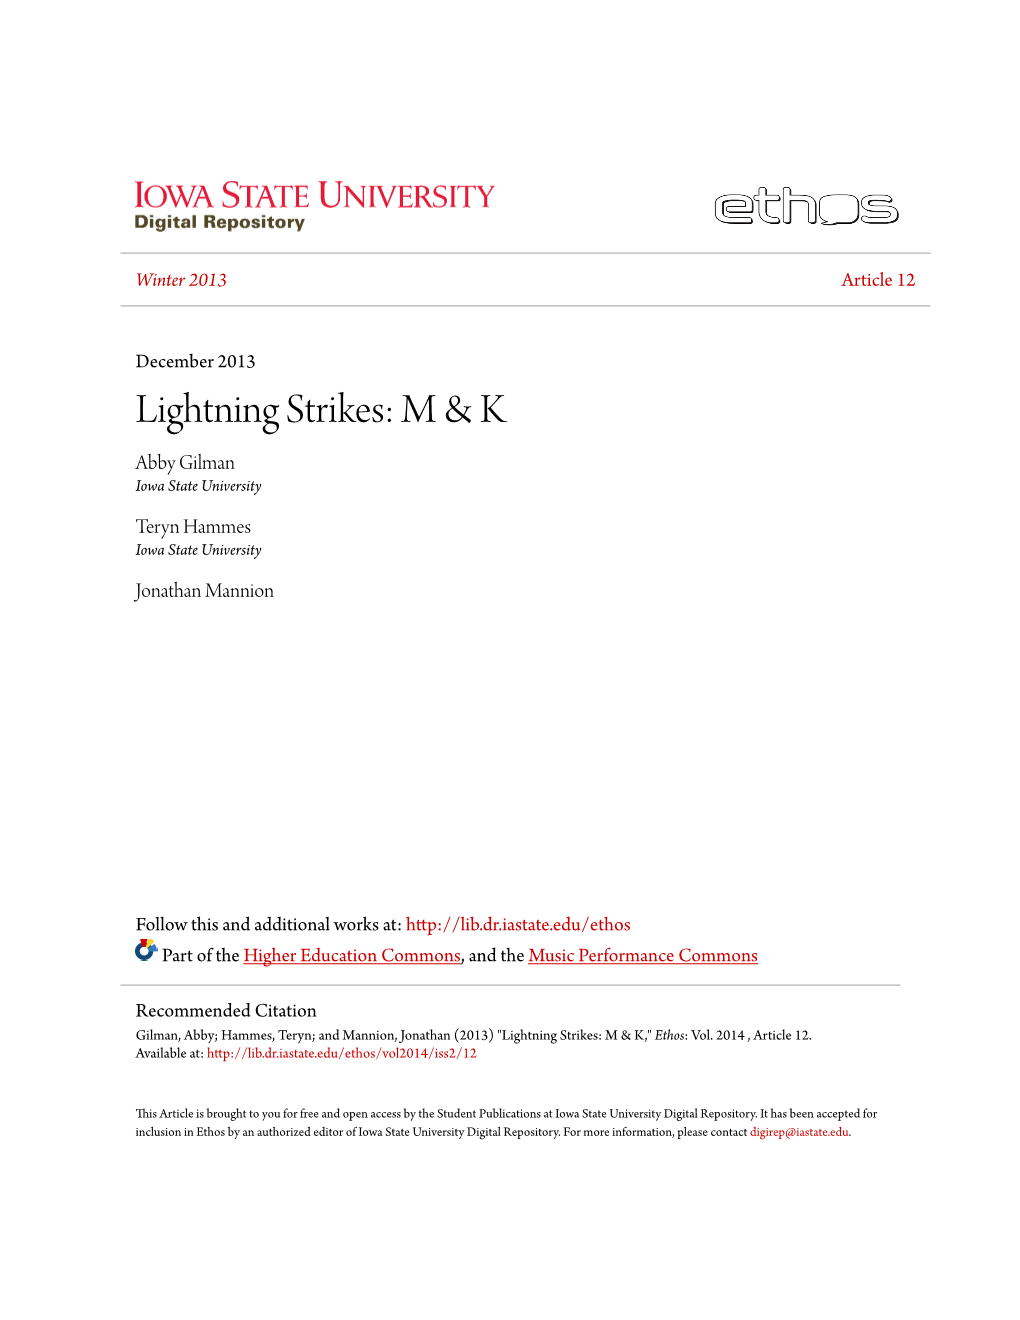 Lightning Strikes: M & K